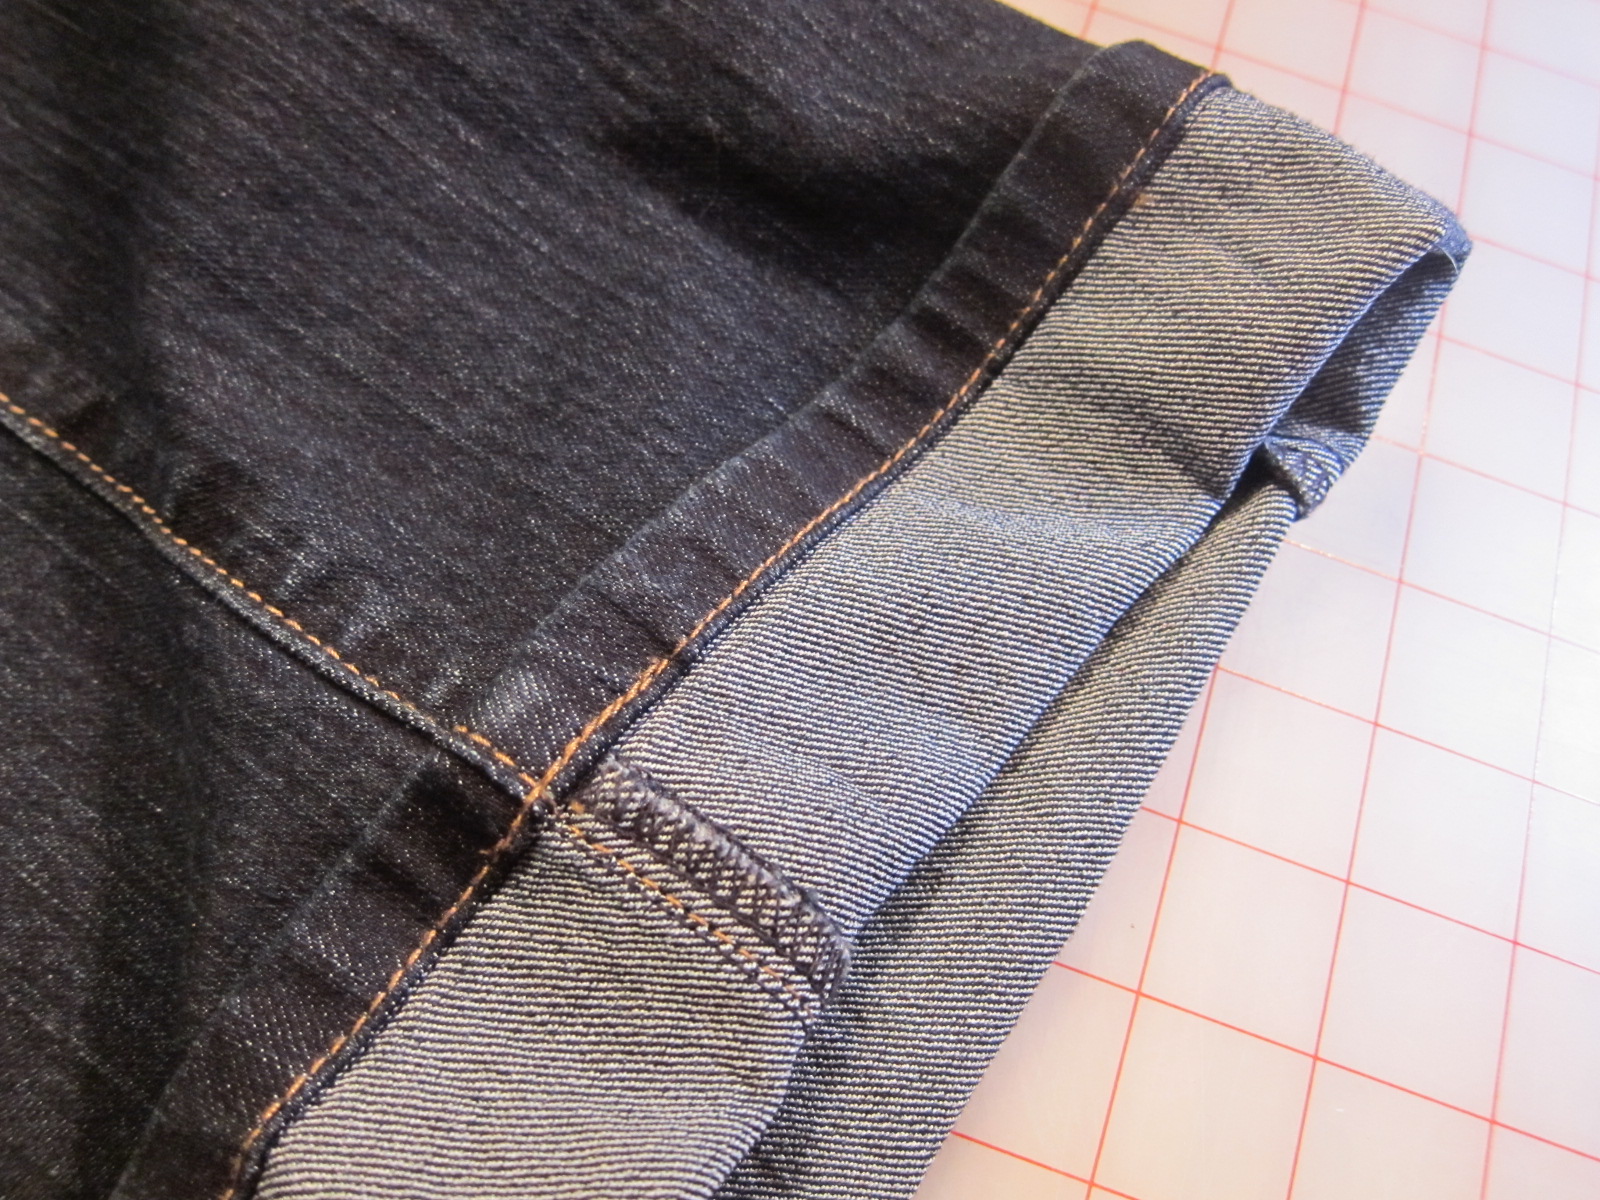 Bernina World of Sewing: Super fast way to hem jeans!